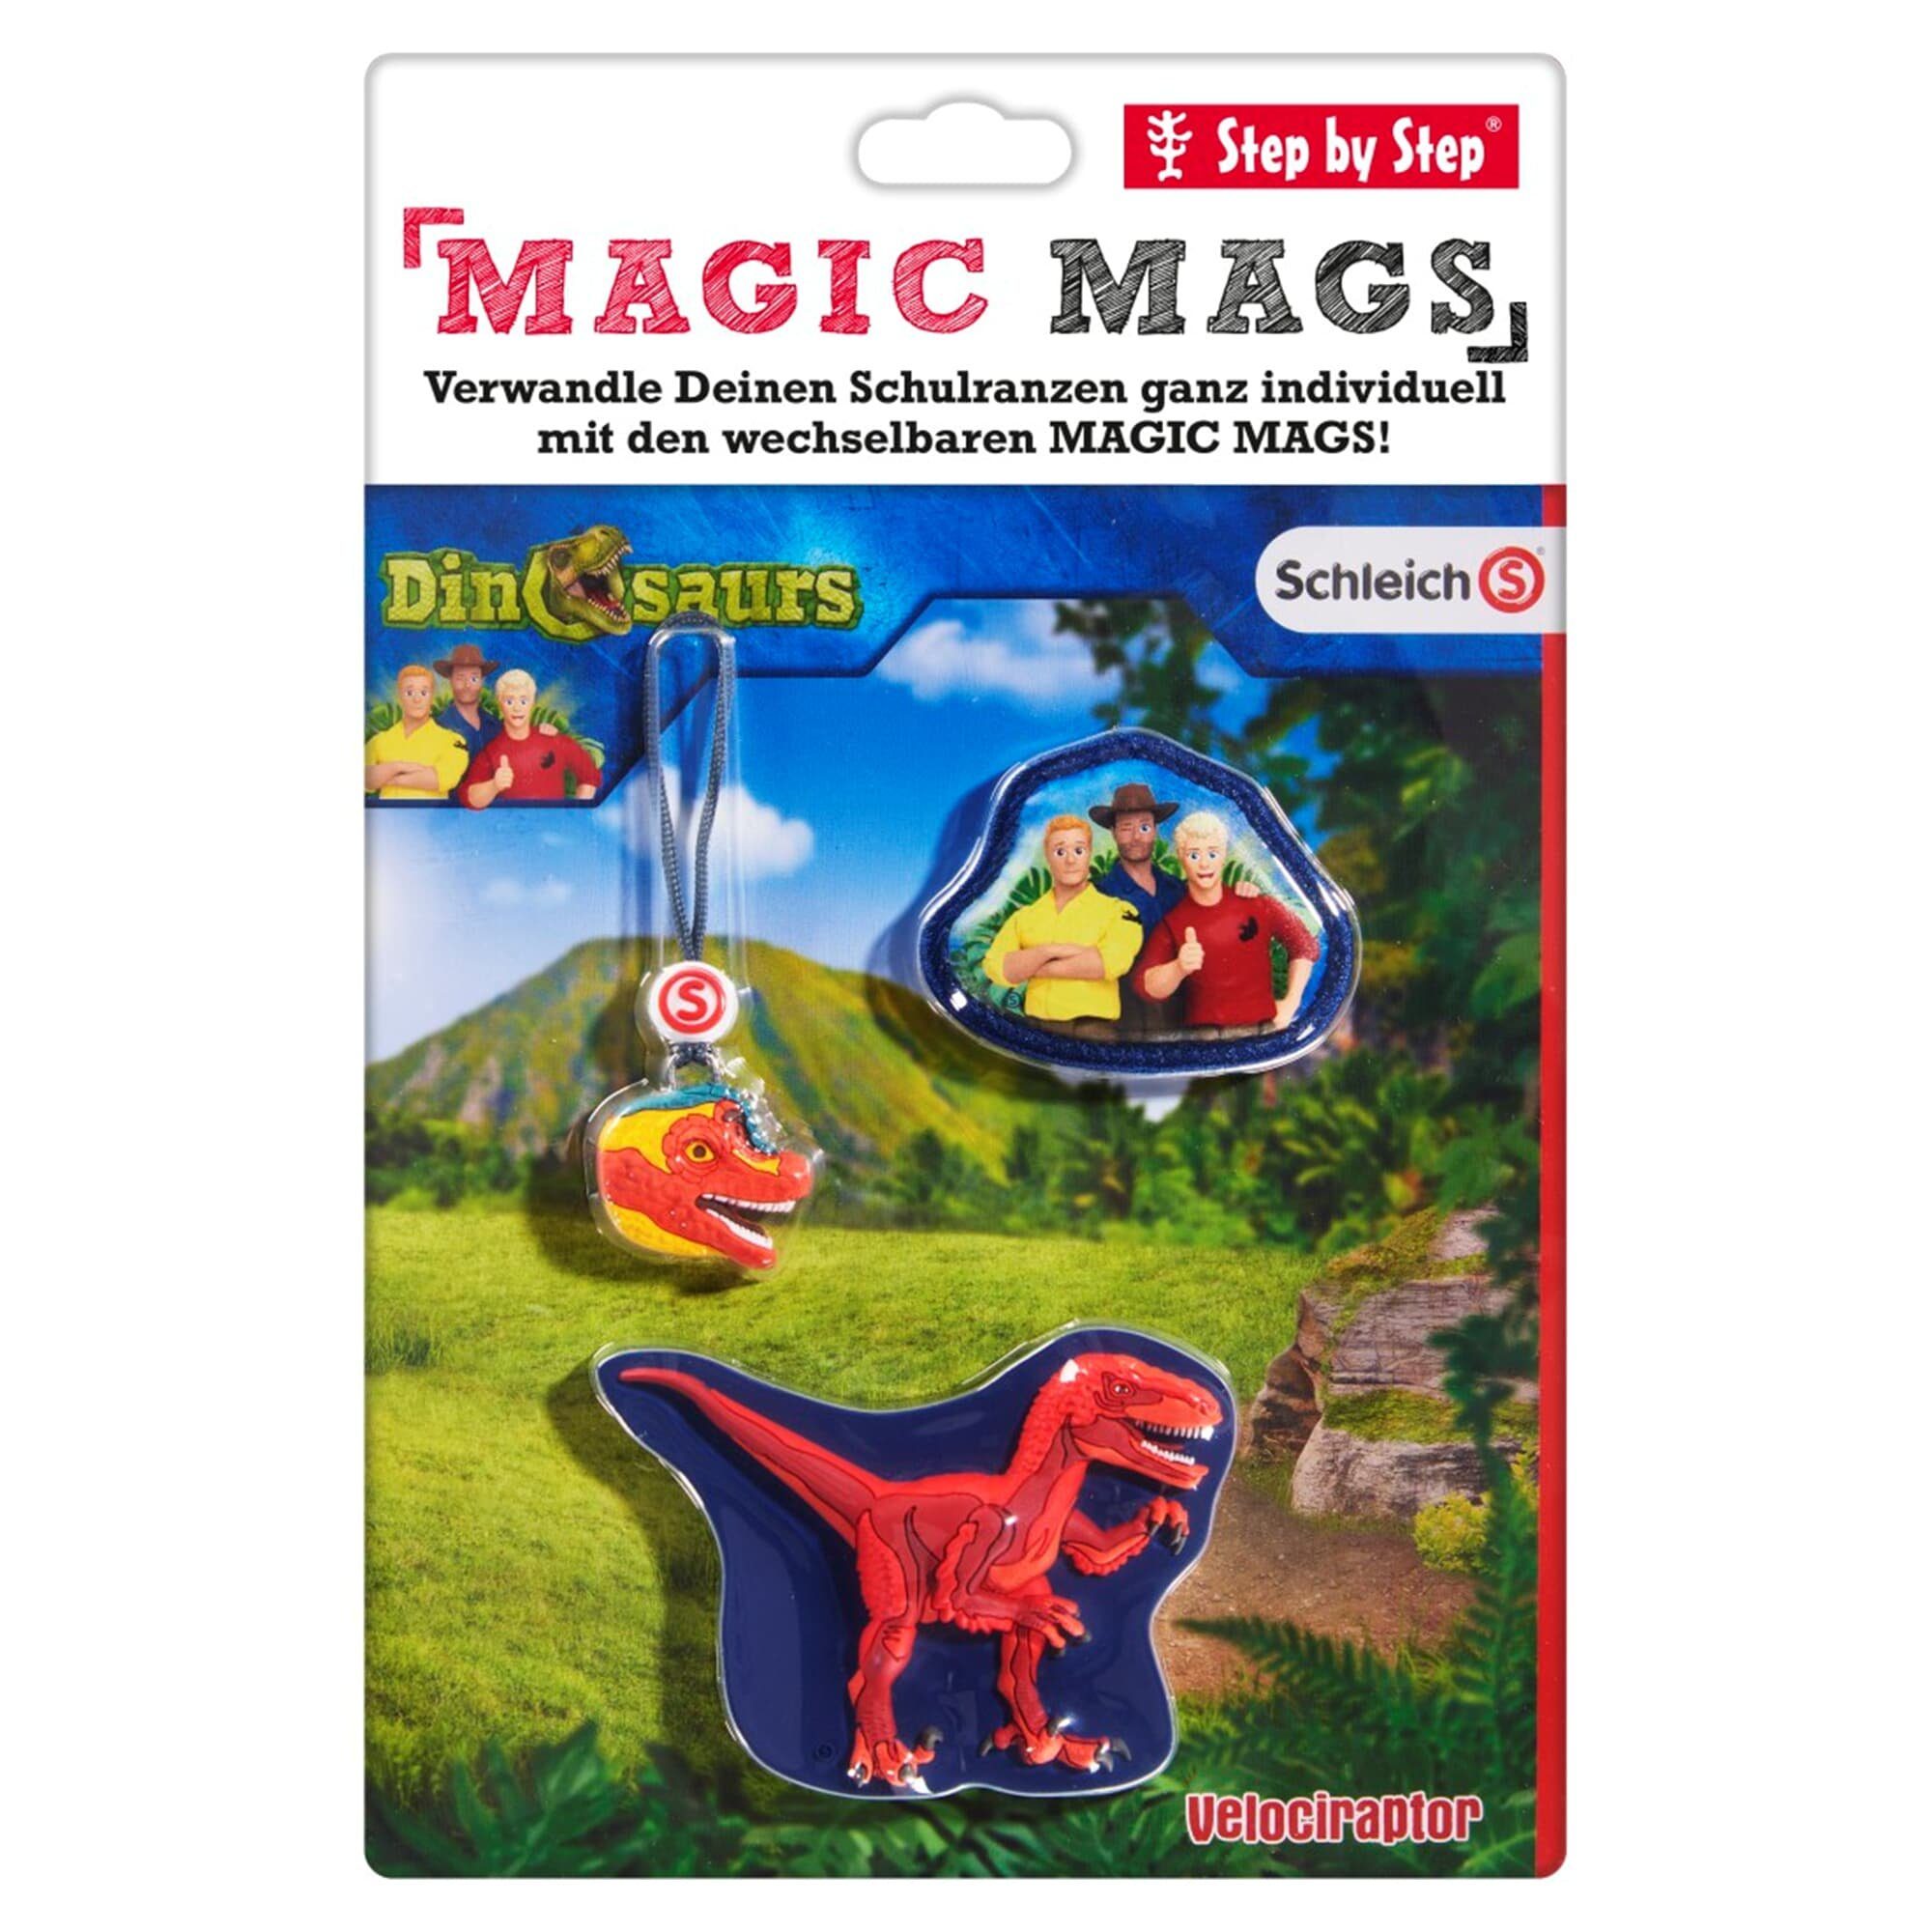 by Step Dinosaurs, Schulranzen MAGS Step Velociraptor MAGIC